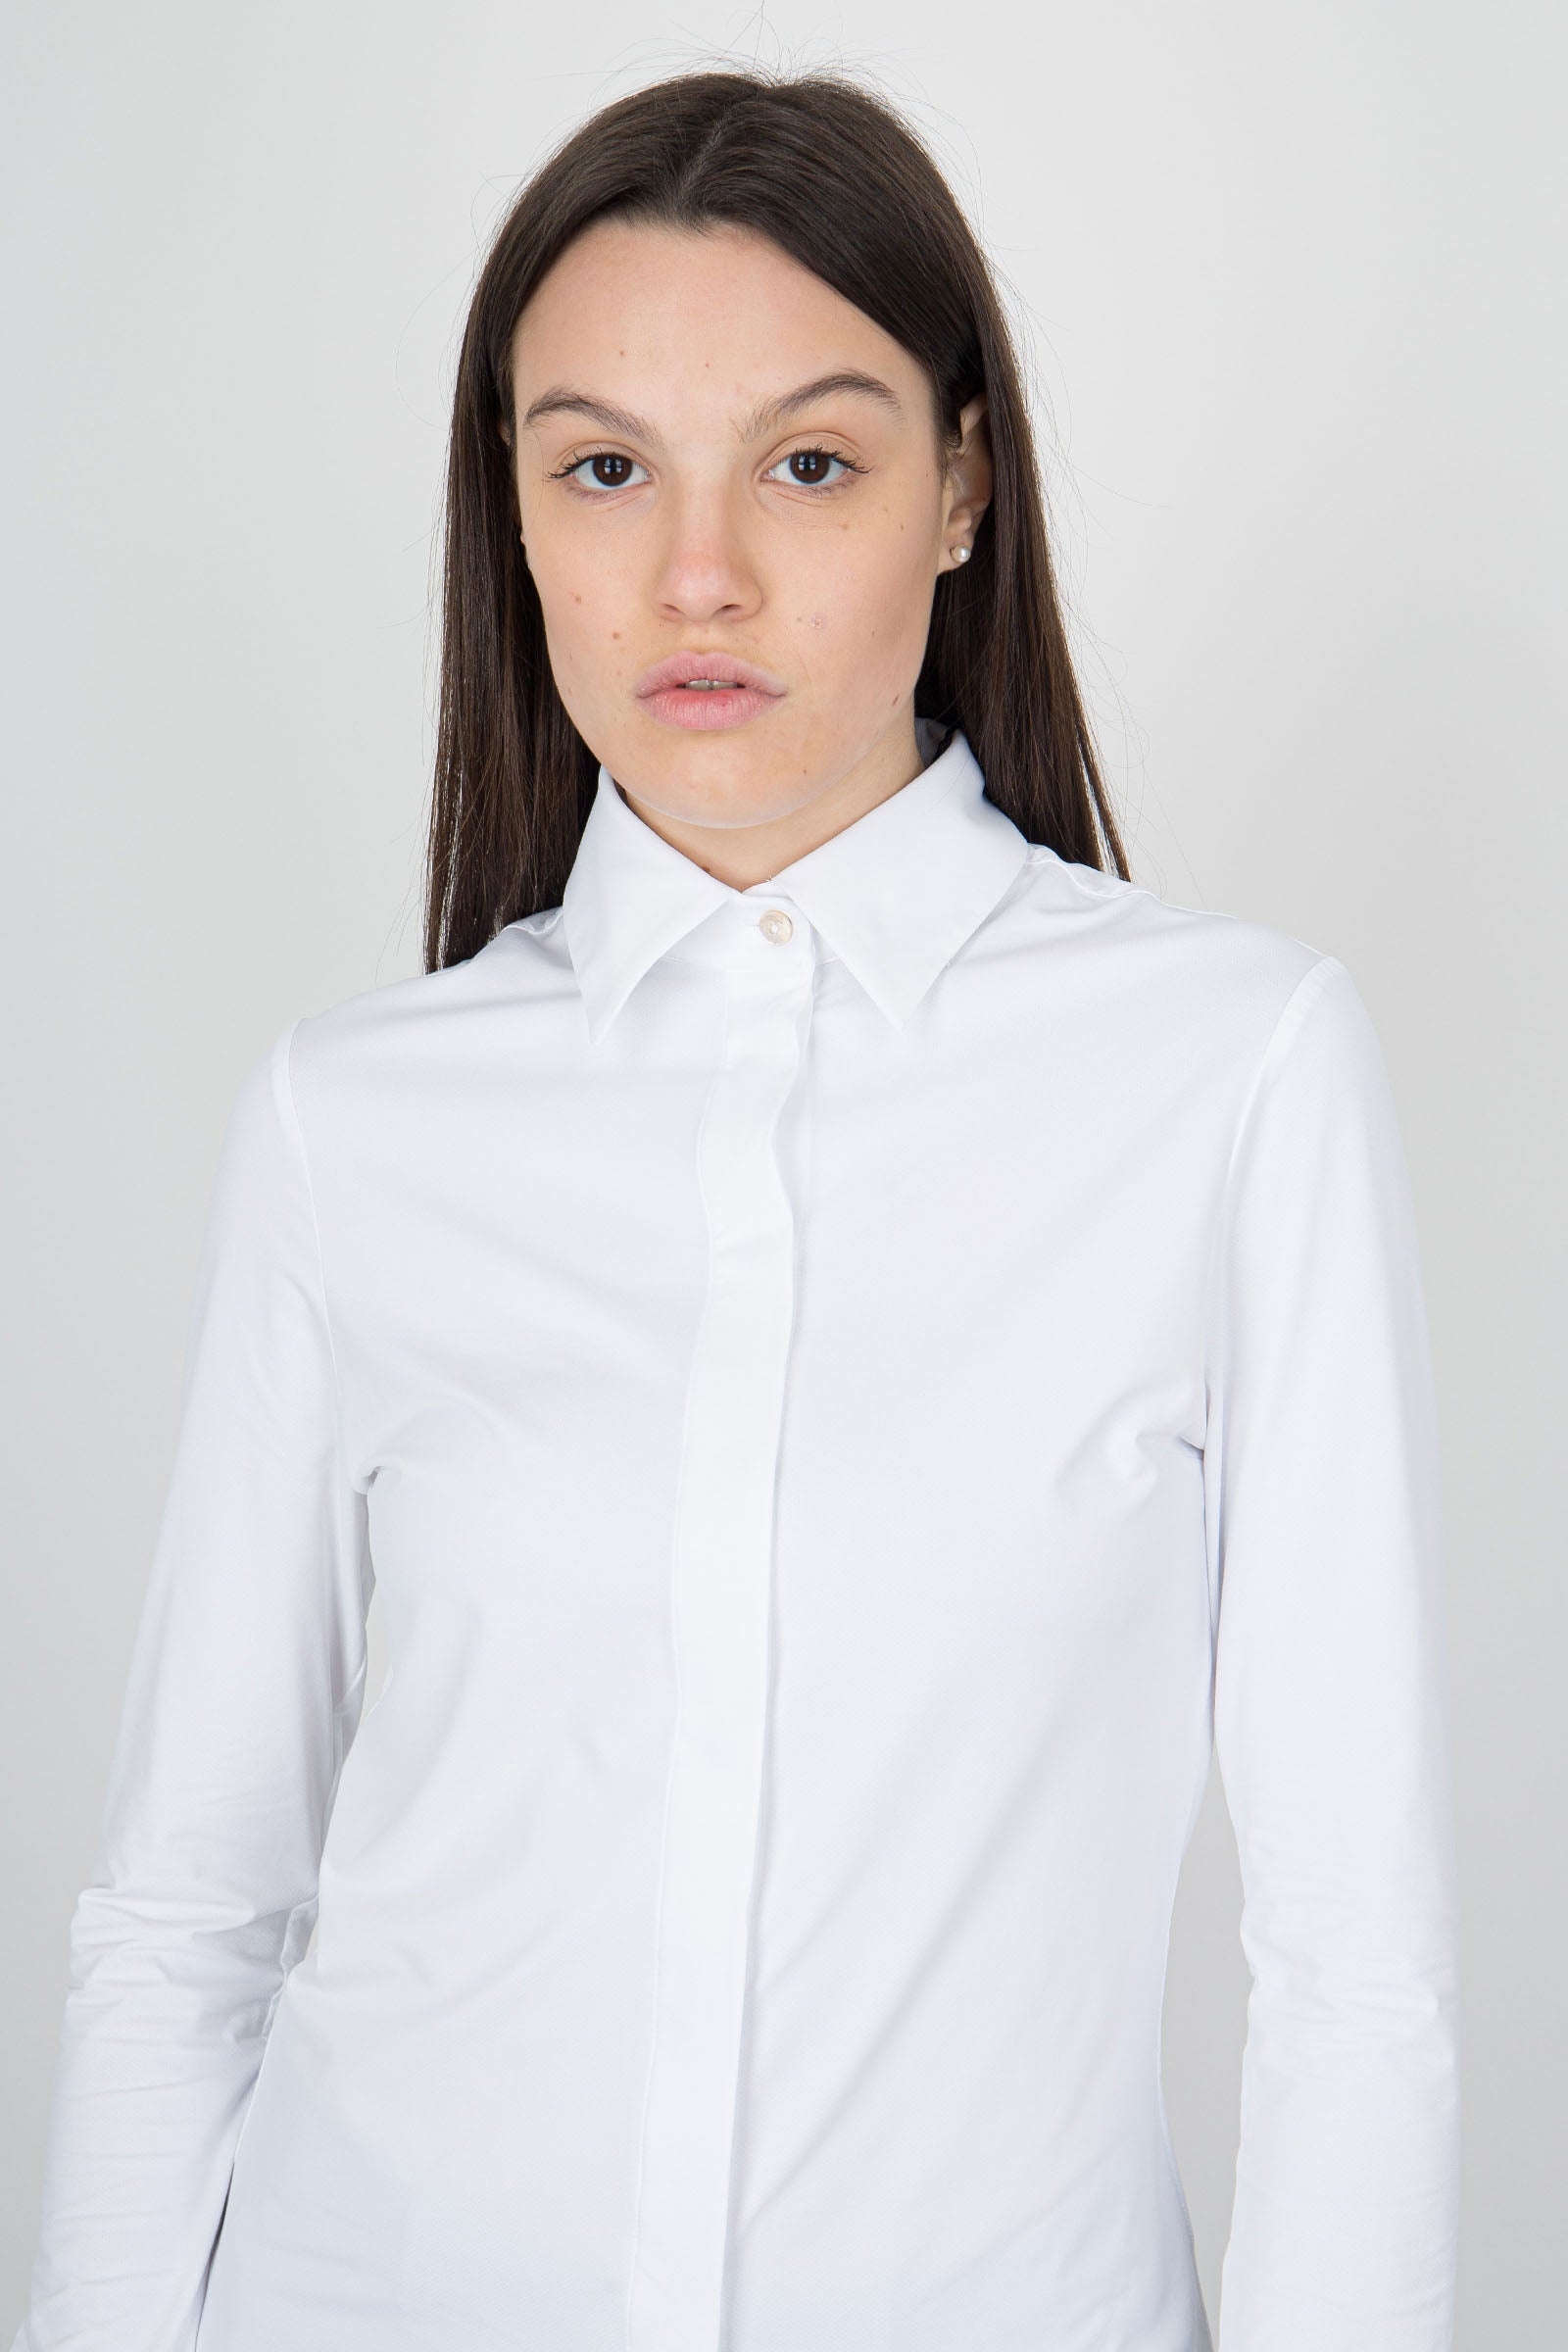 Shirty Oxford Plain Woman Shirt - 1